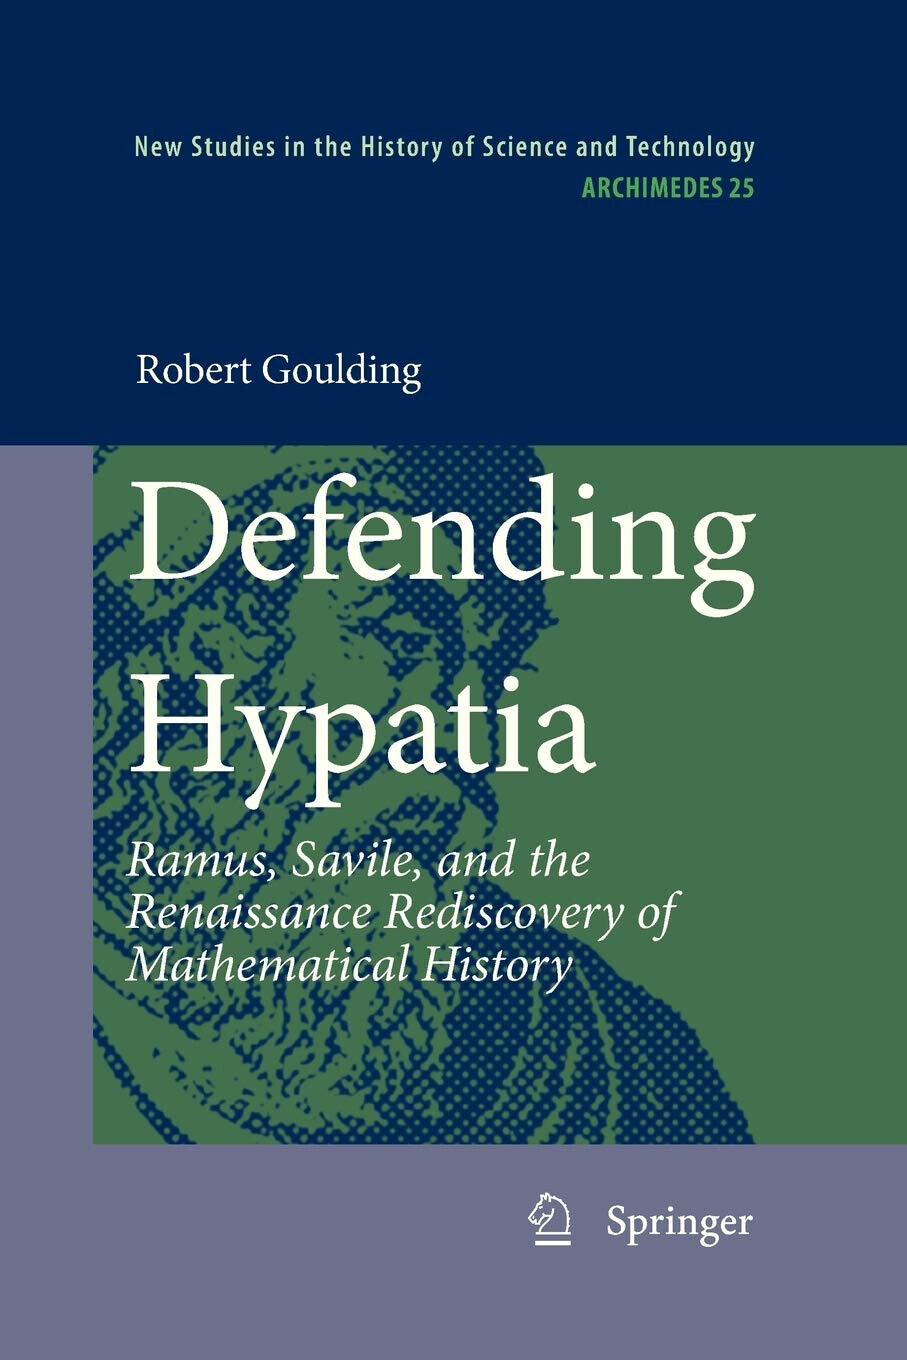 Defending Hypatia - Robert Goulding - Springer, 2012